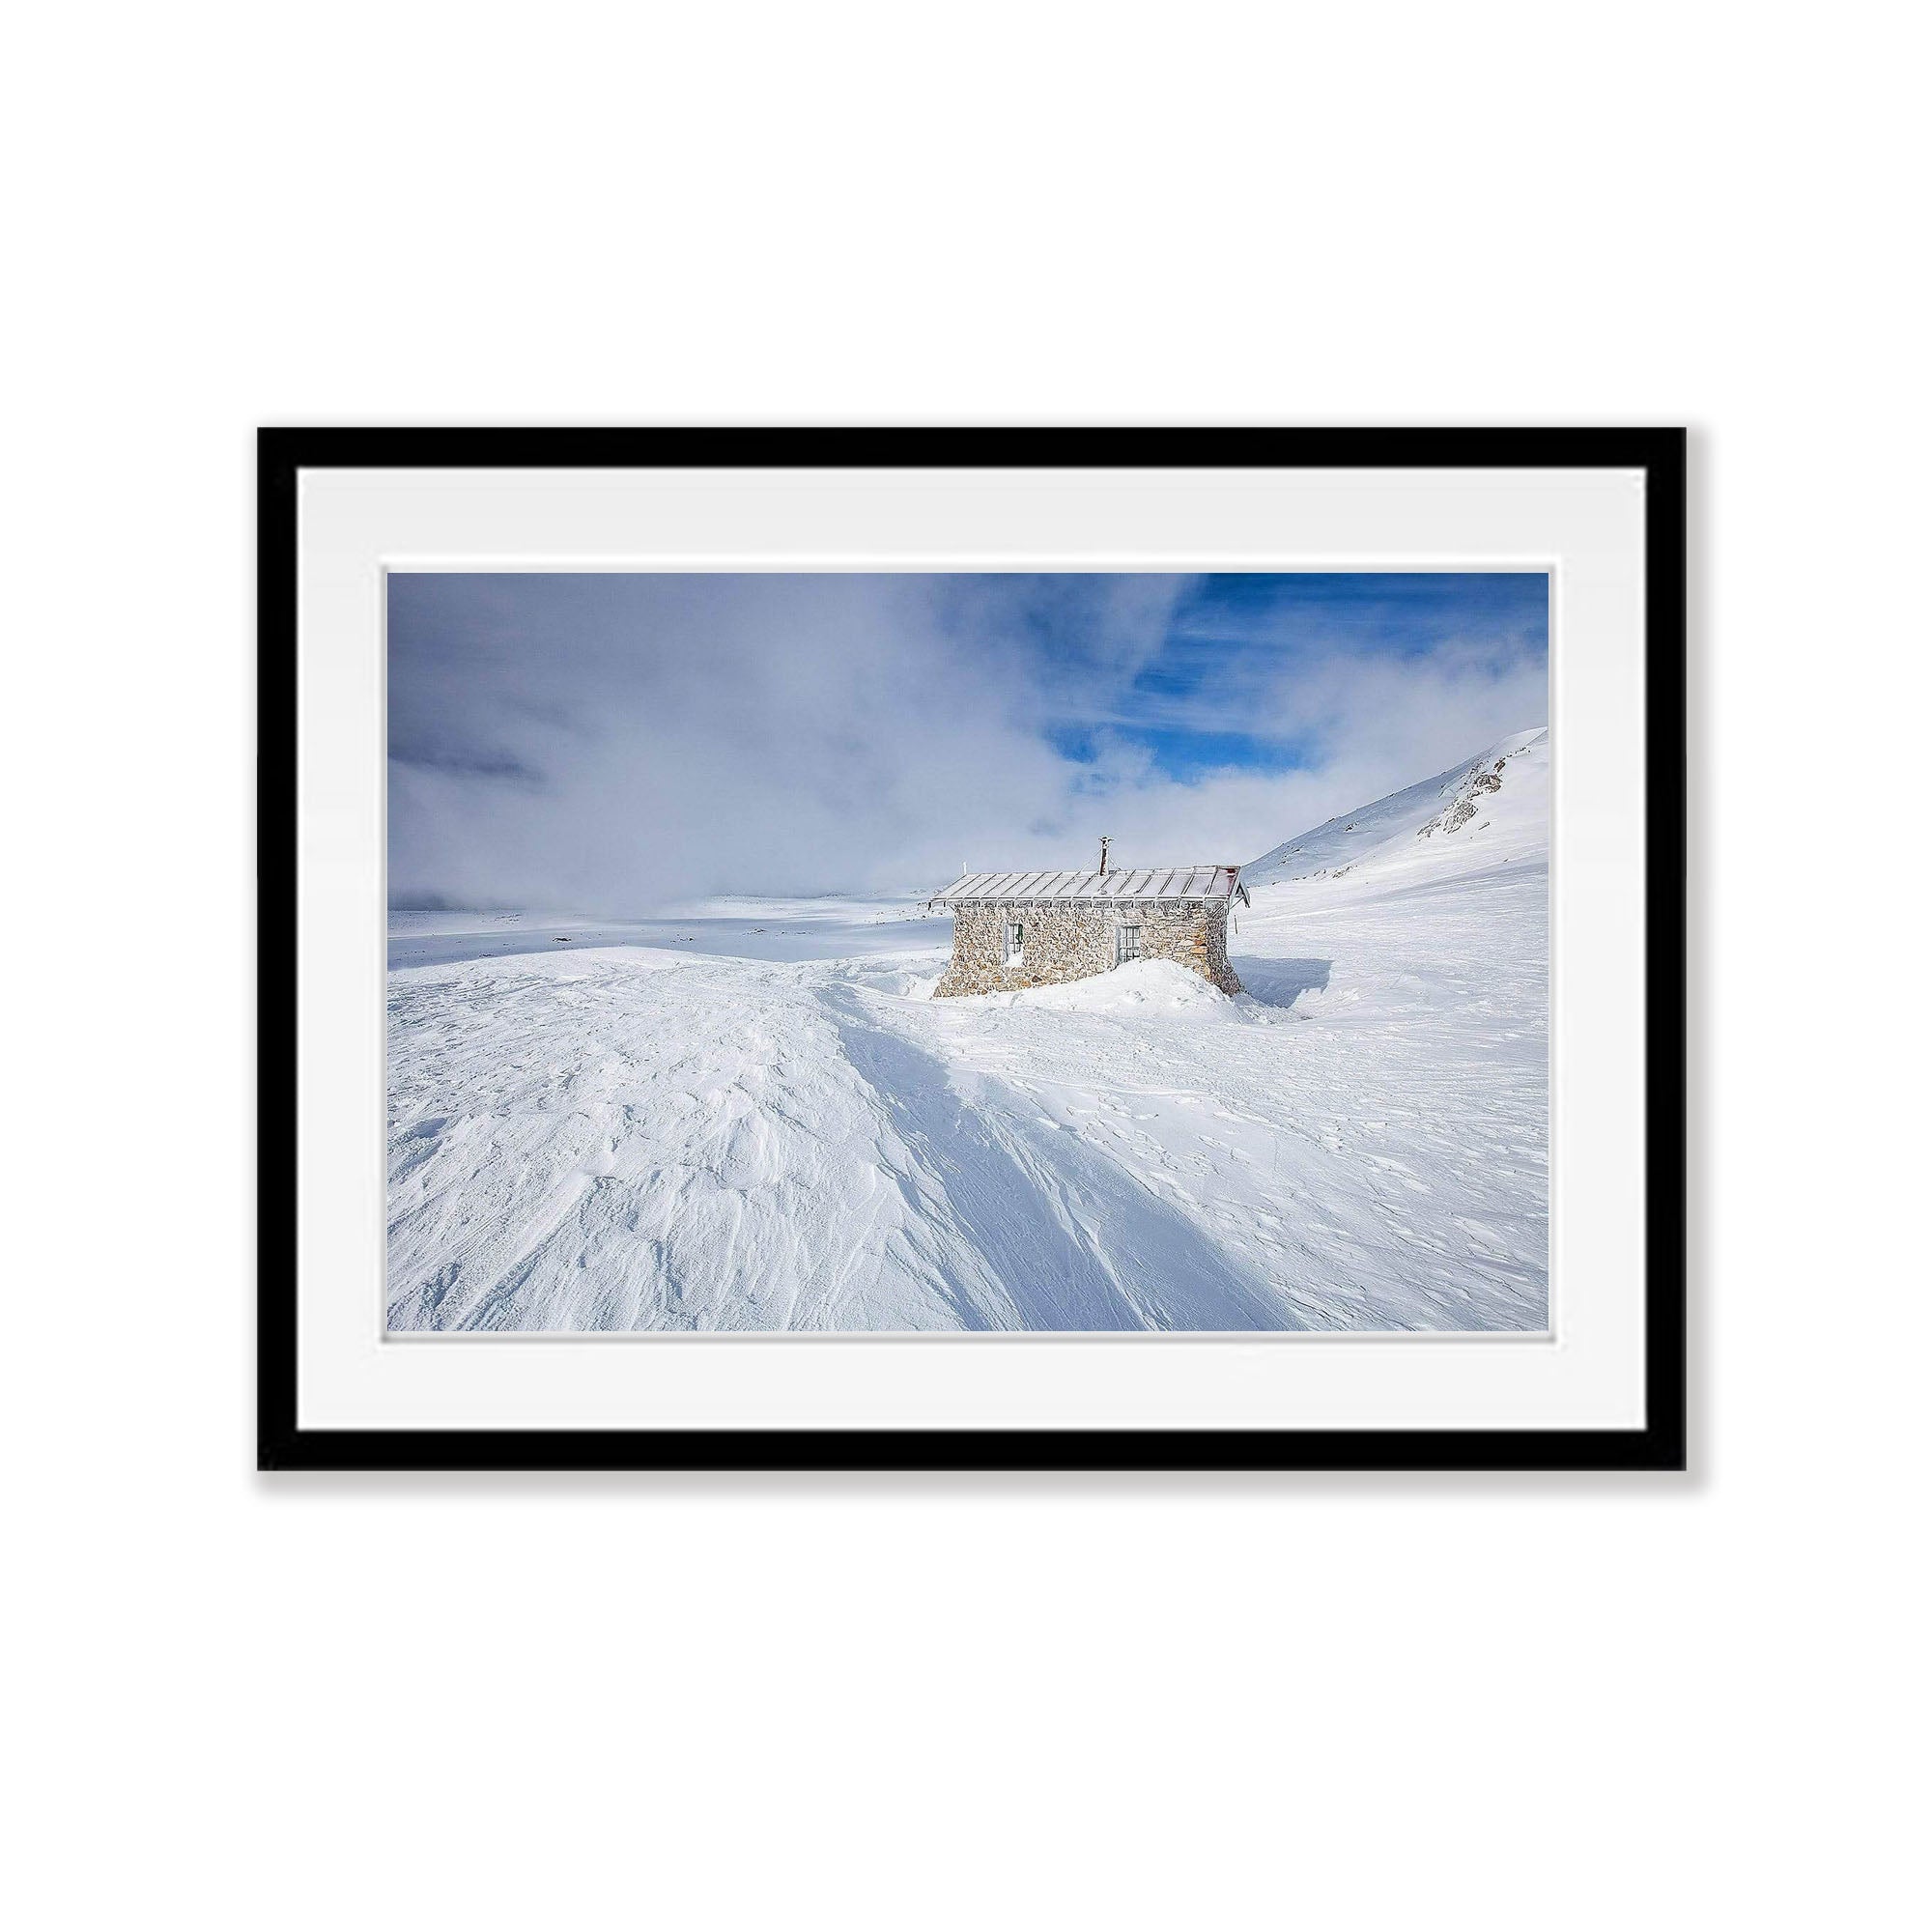 ARTWORK INSTOCK - Seaman's Hut, Snowy Mountains NSW - 100 x 66cms Raw Oak Framed Canvas Print